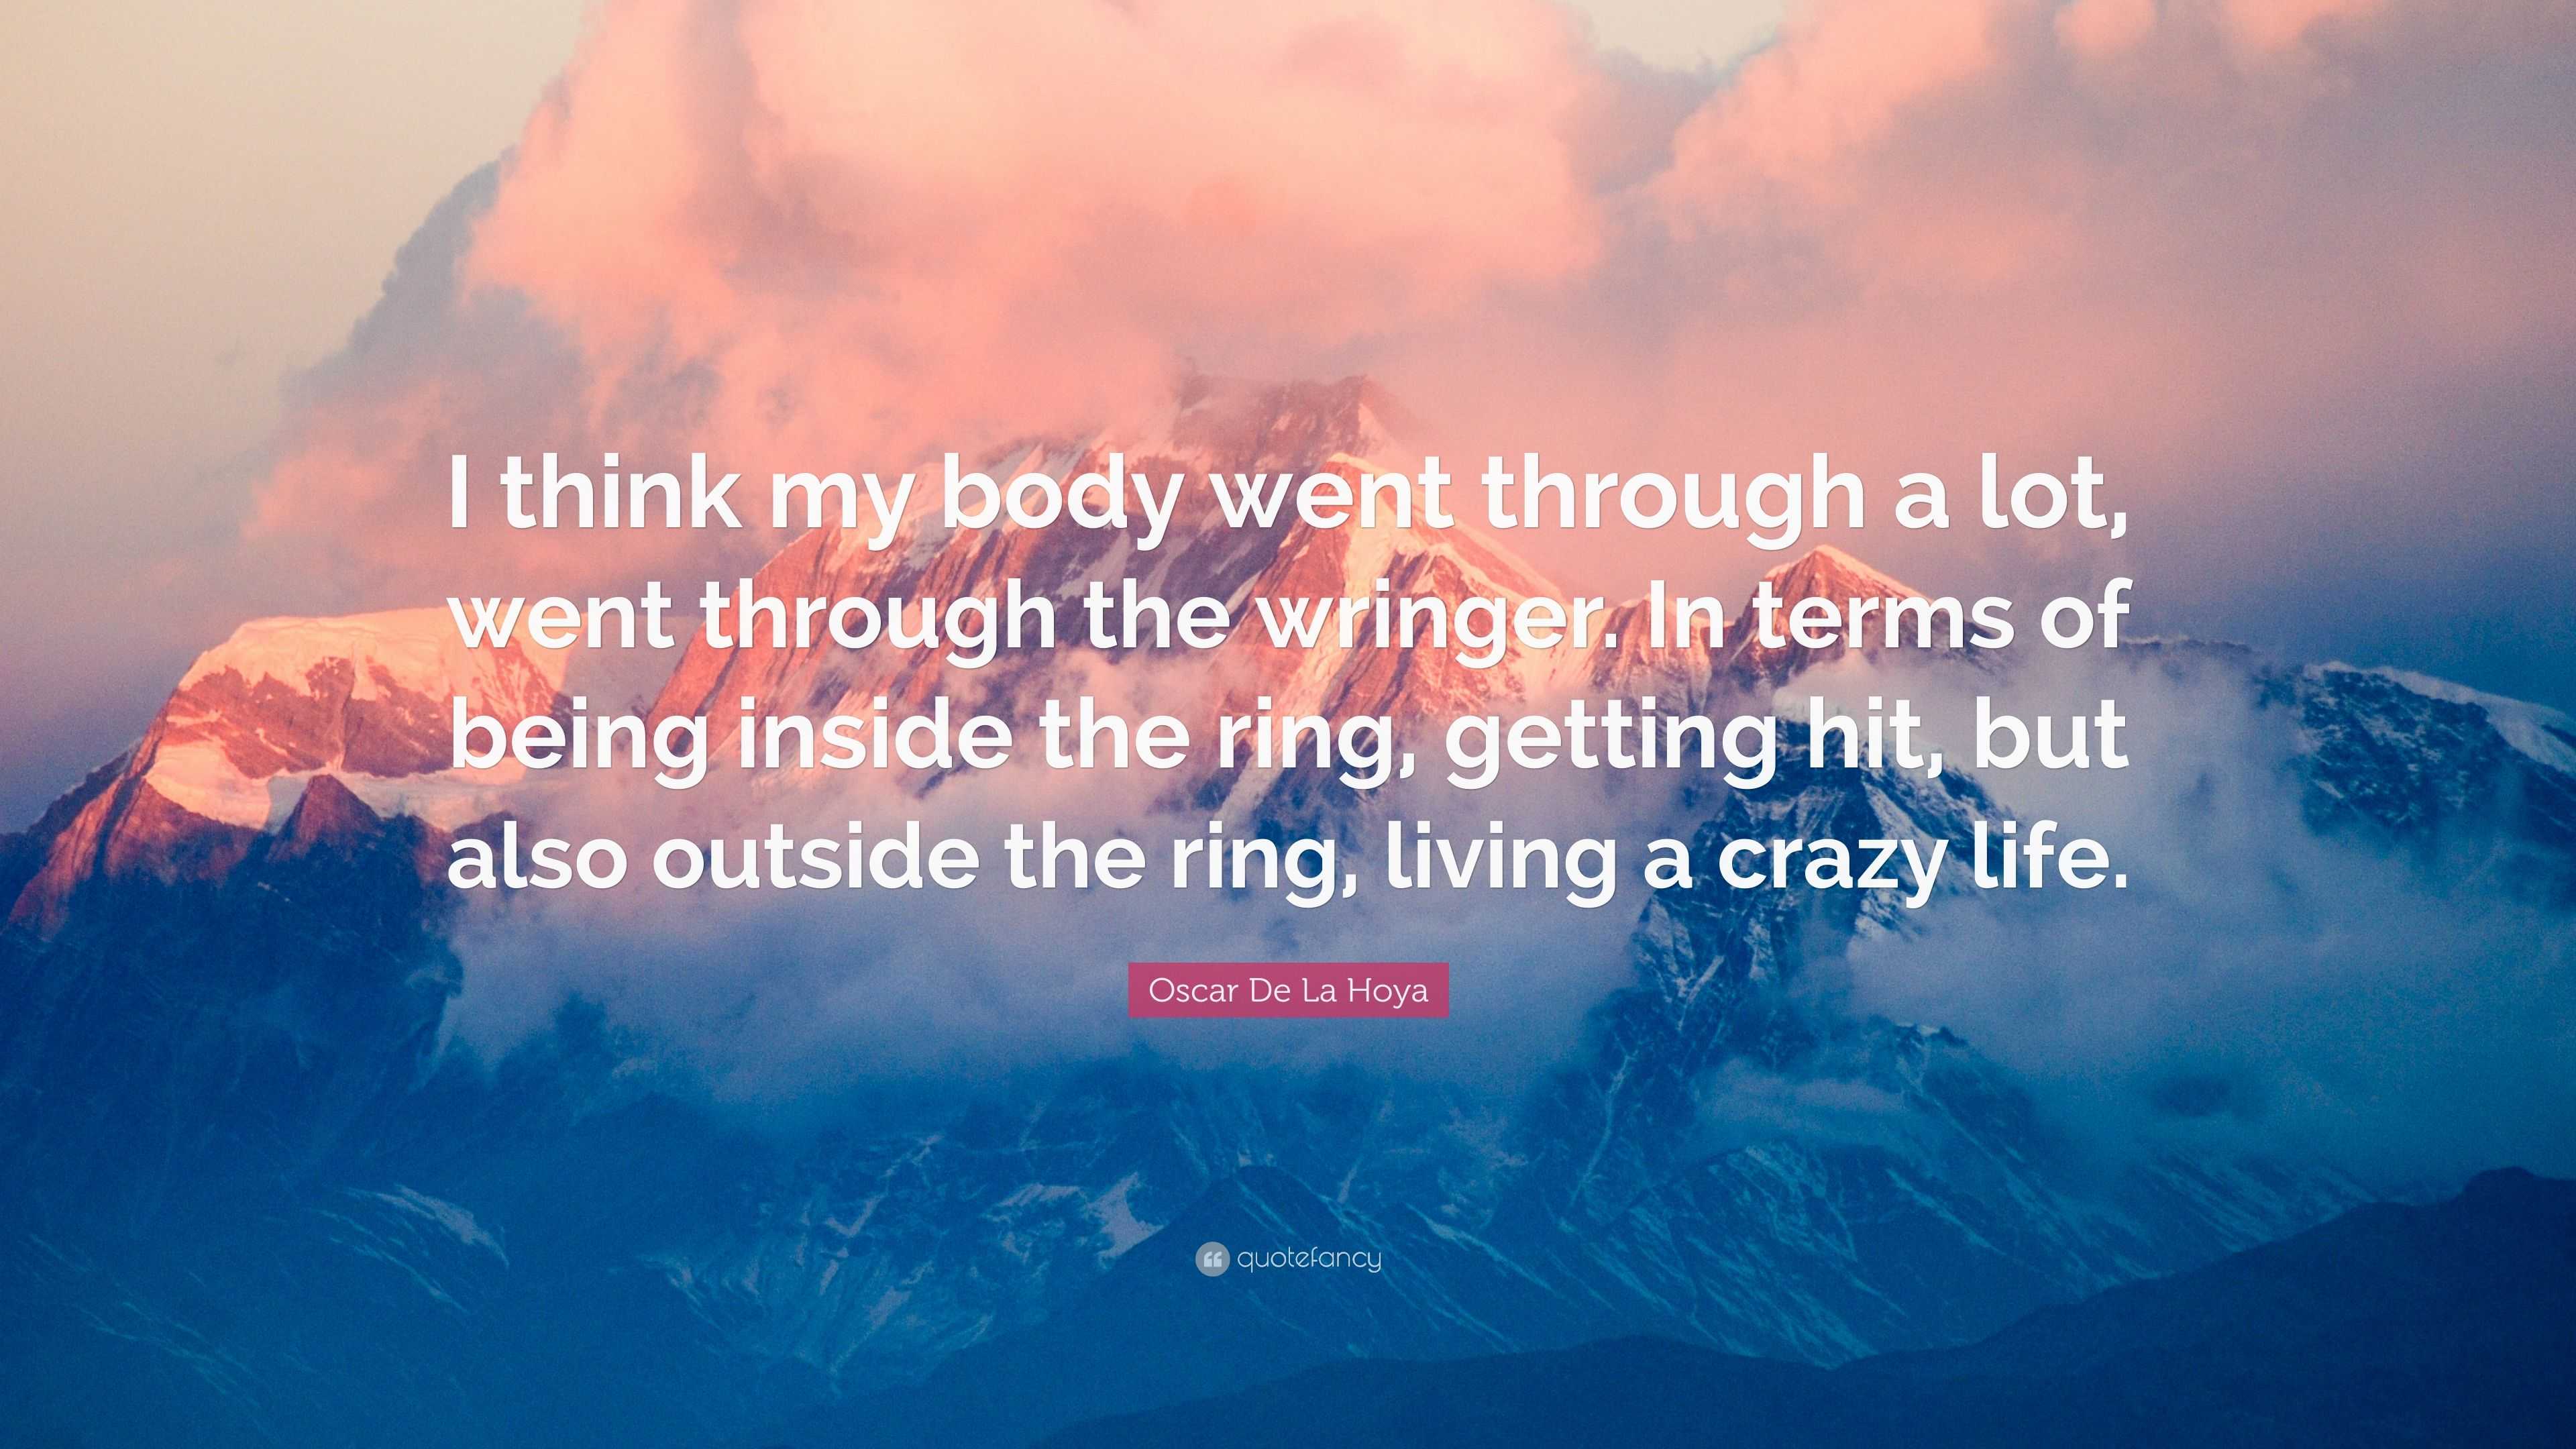 Oscar De La Hoya Quote: “I think my body went through a lot, went ...